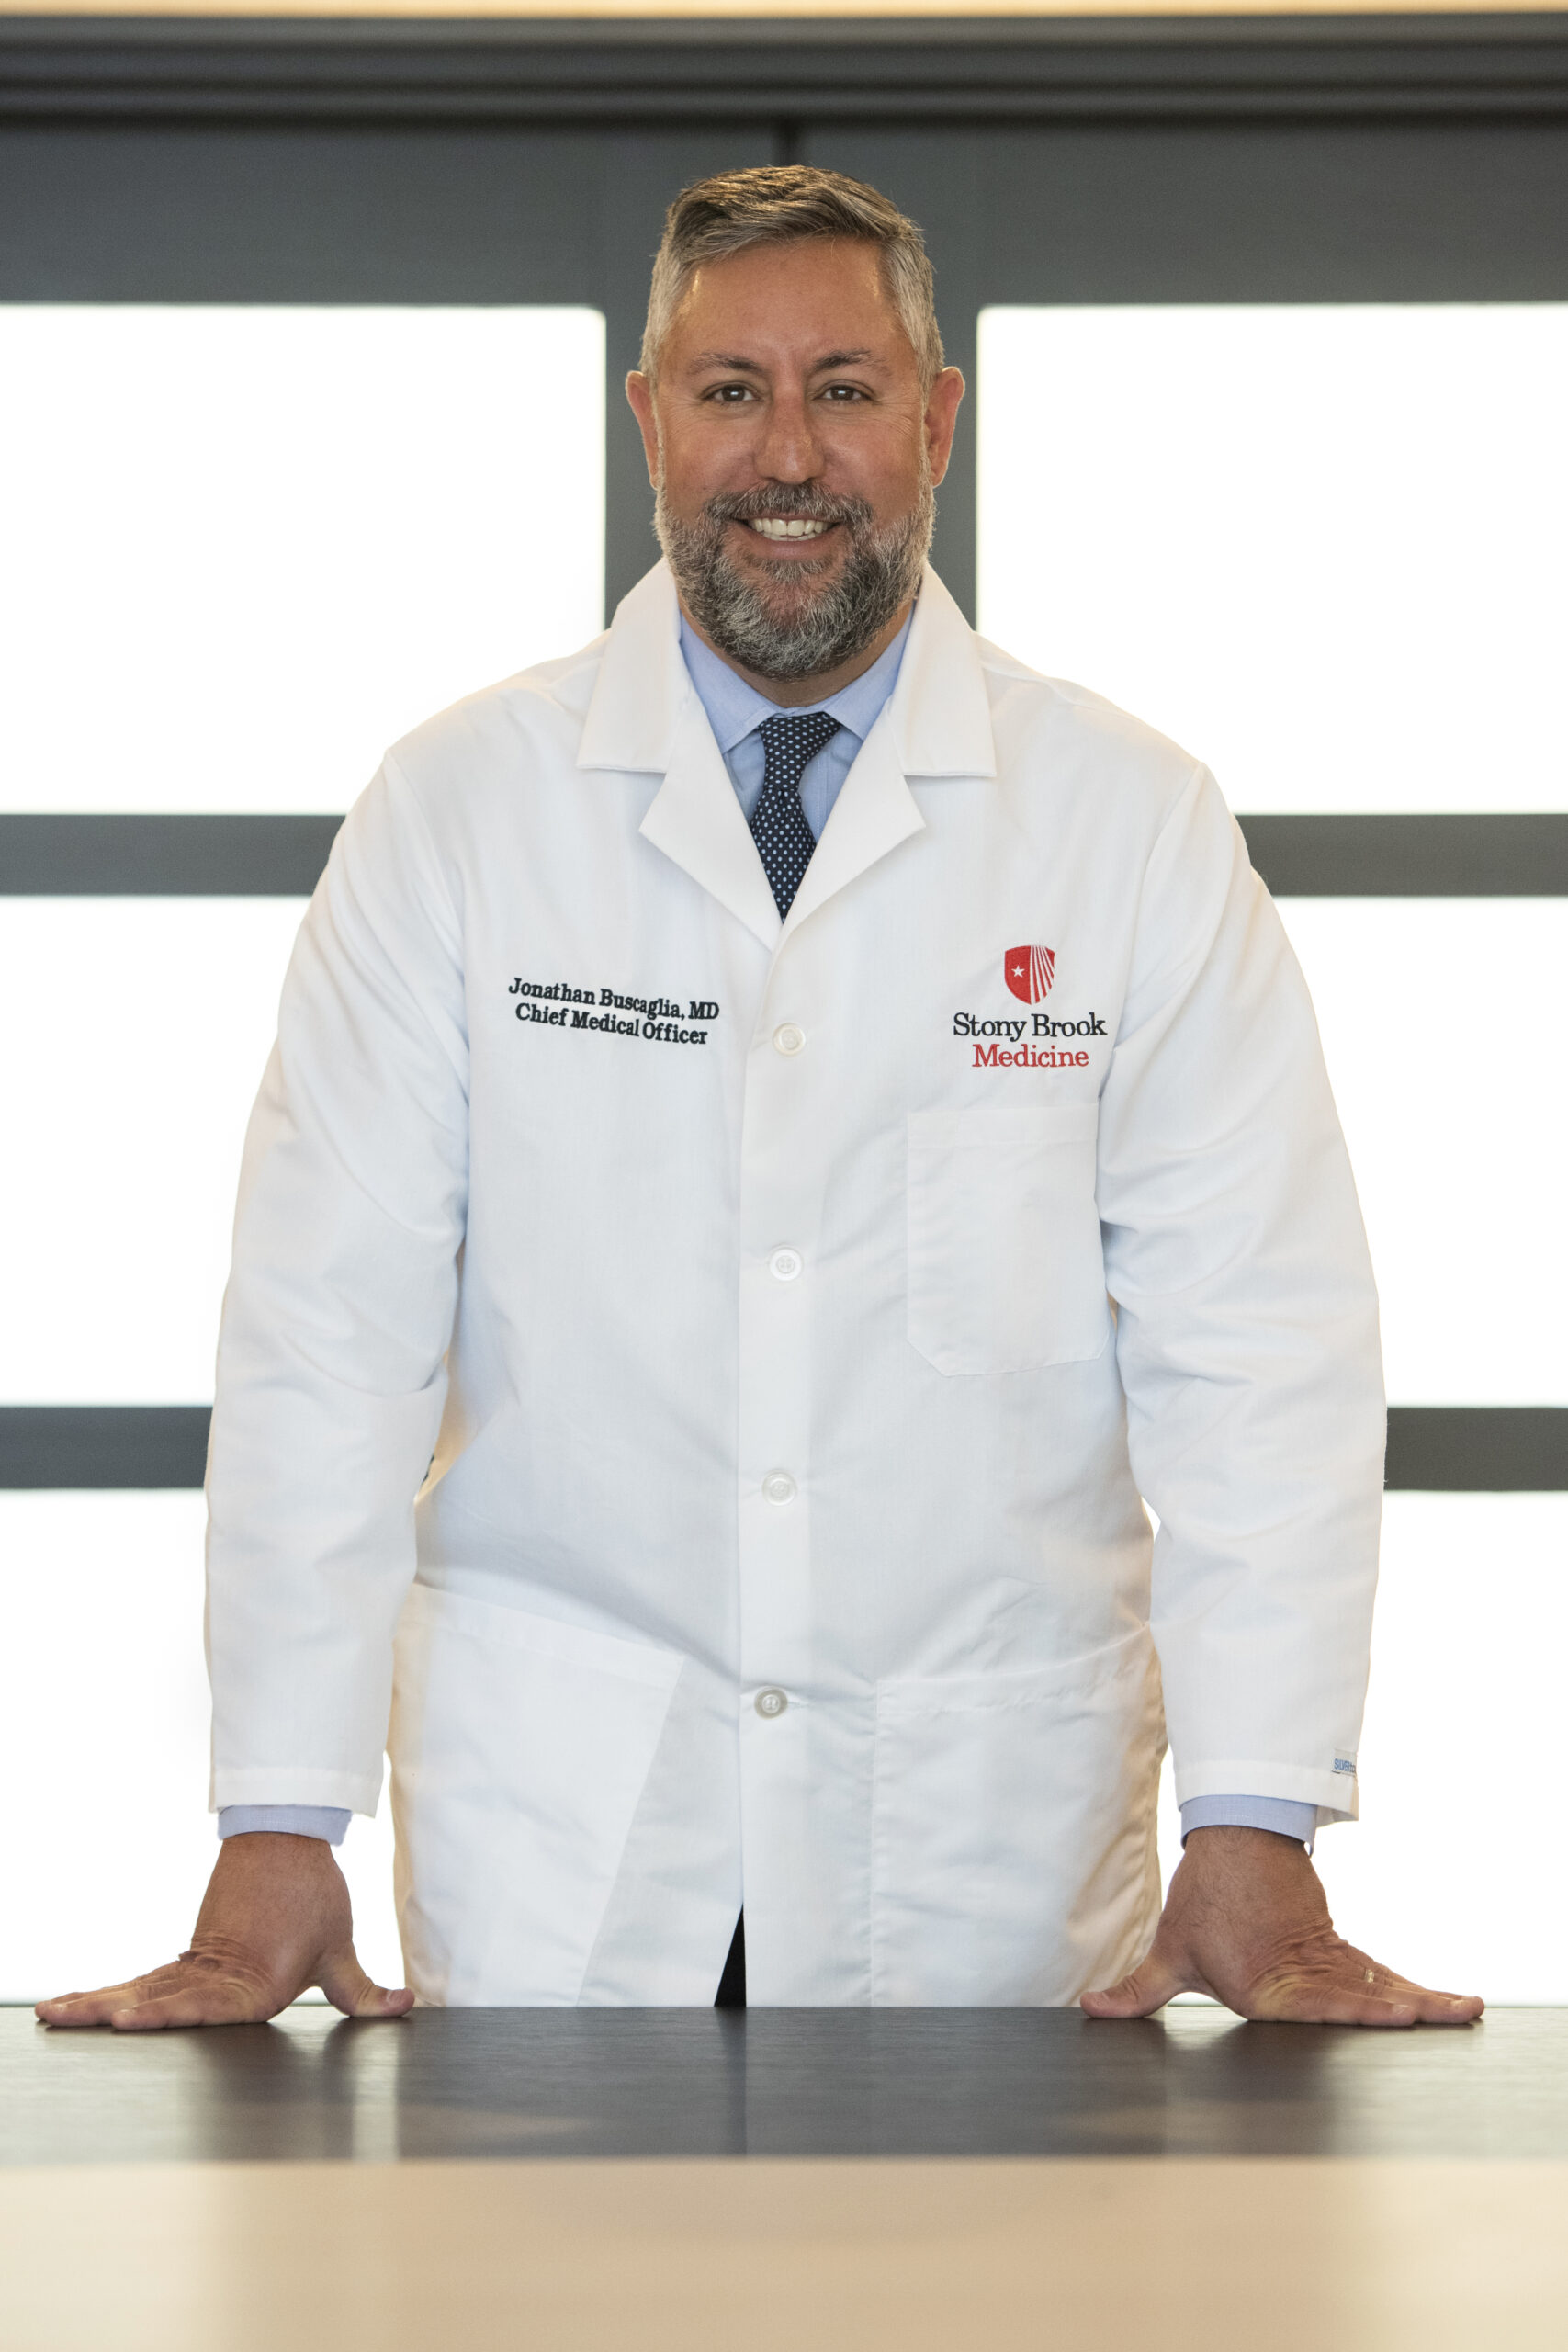 Dr. Jonathan Buscaglia, Chief Medical Officer for Stony Brook University Hospital. COURTESY STONY BROOK UNIVERSITY